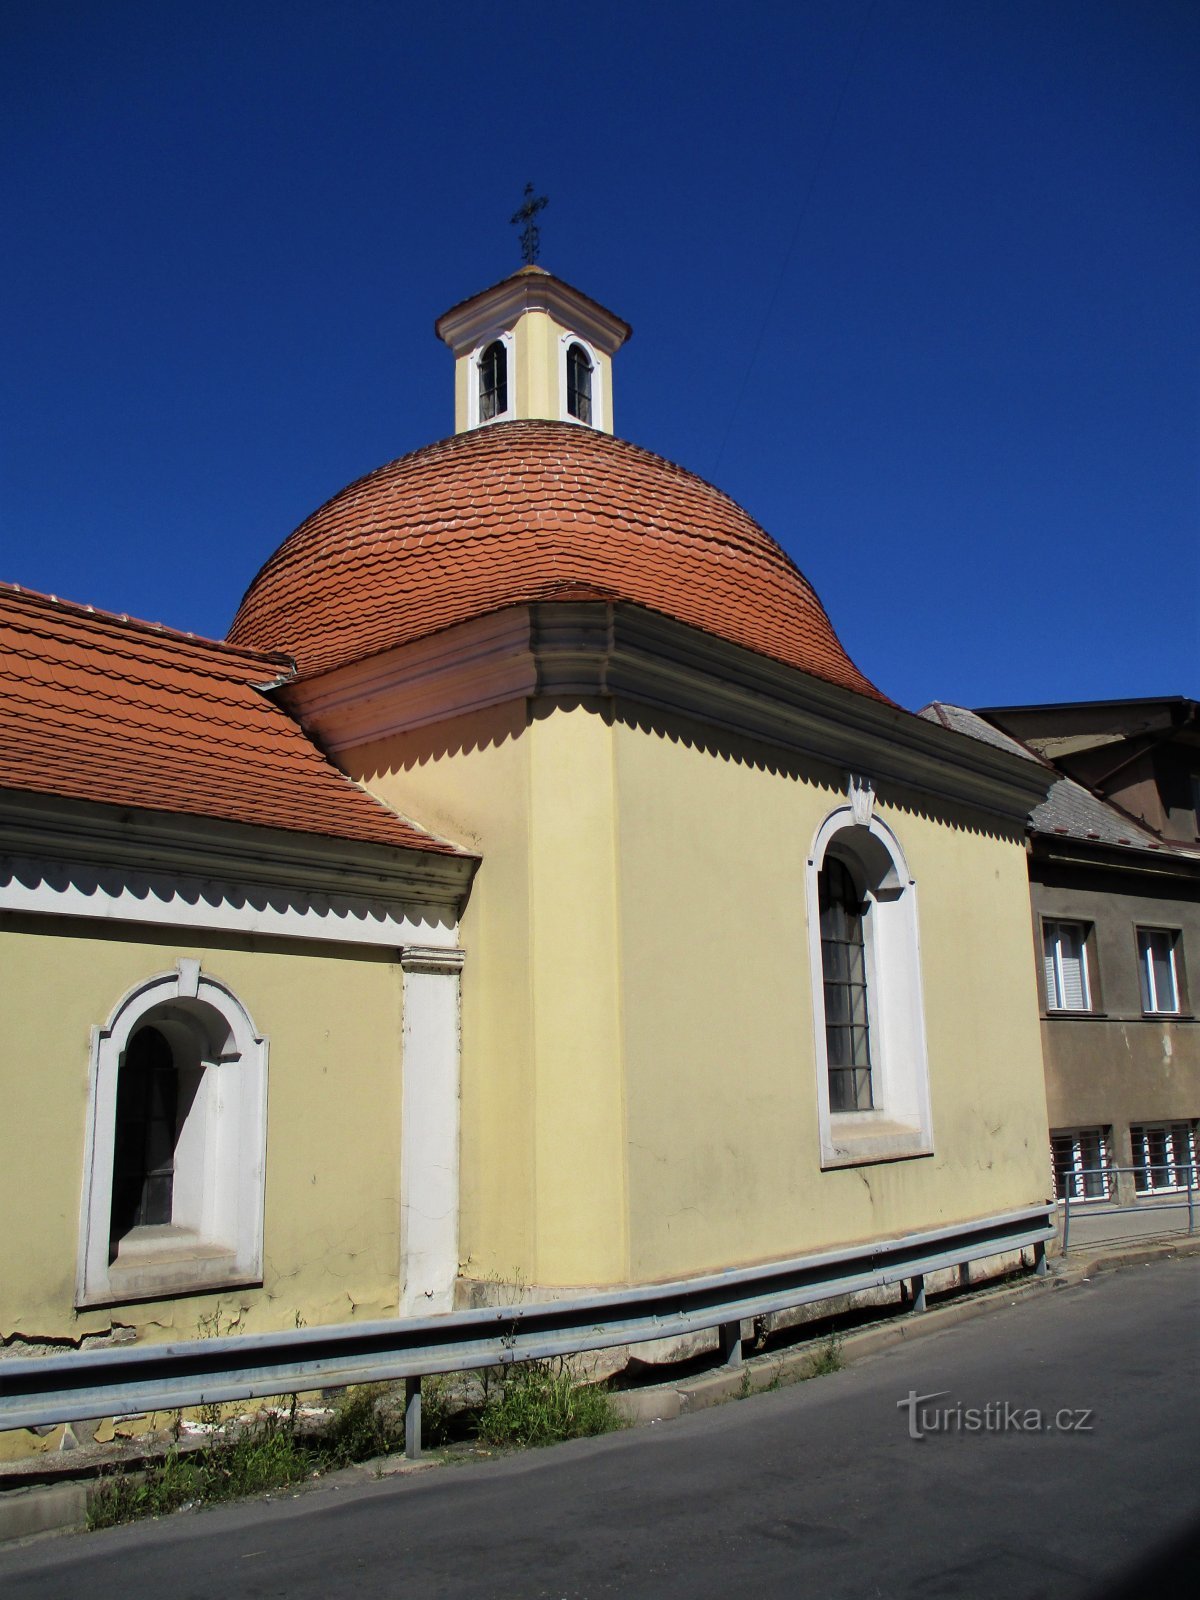 Kapel af St. Josefa (Roudnice nad Labem, 31.7.2020. juli XNUMX)